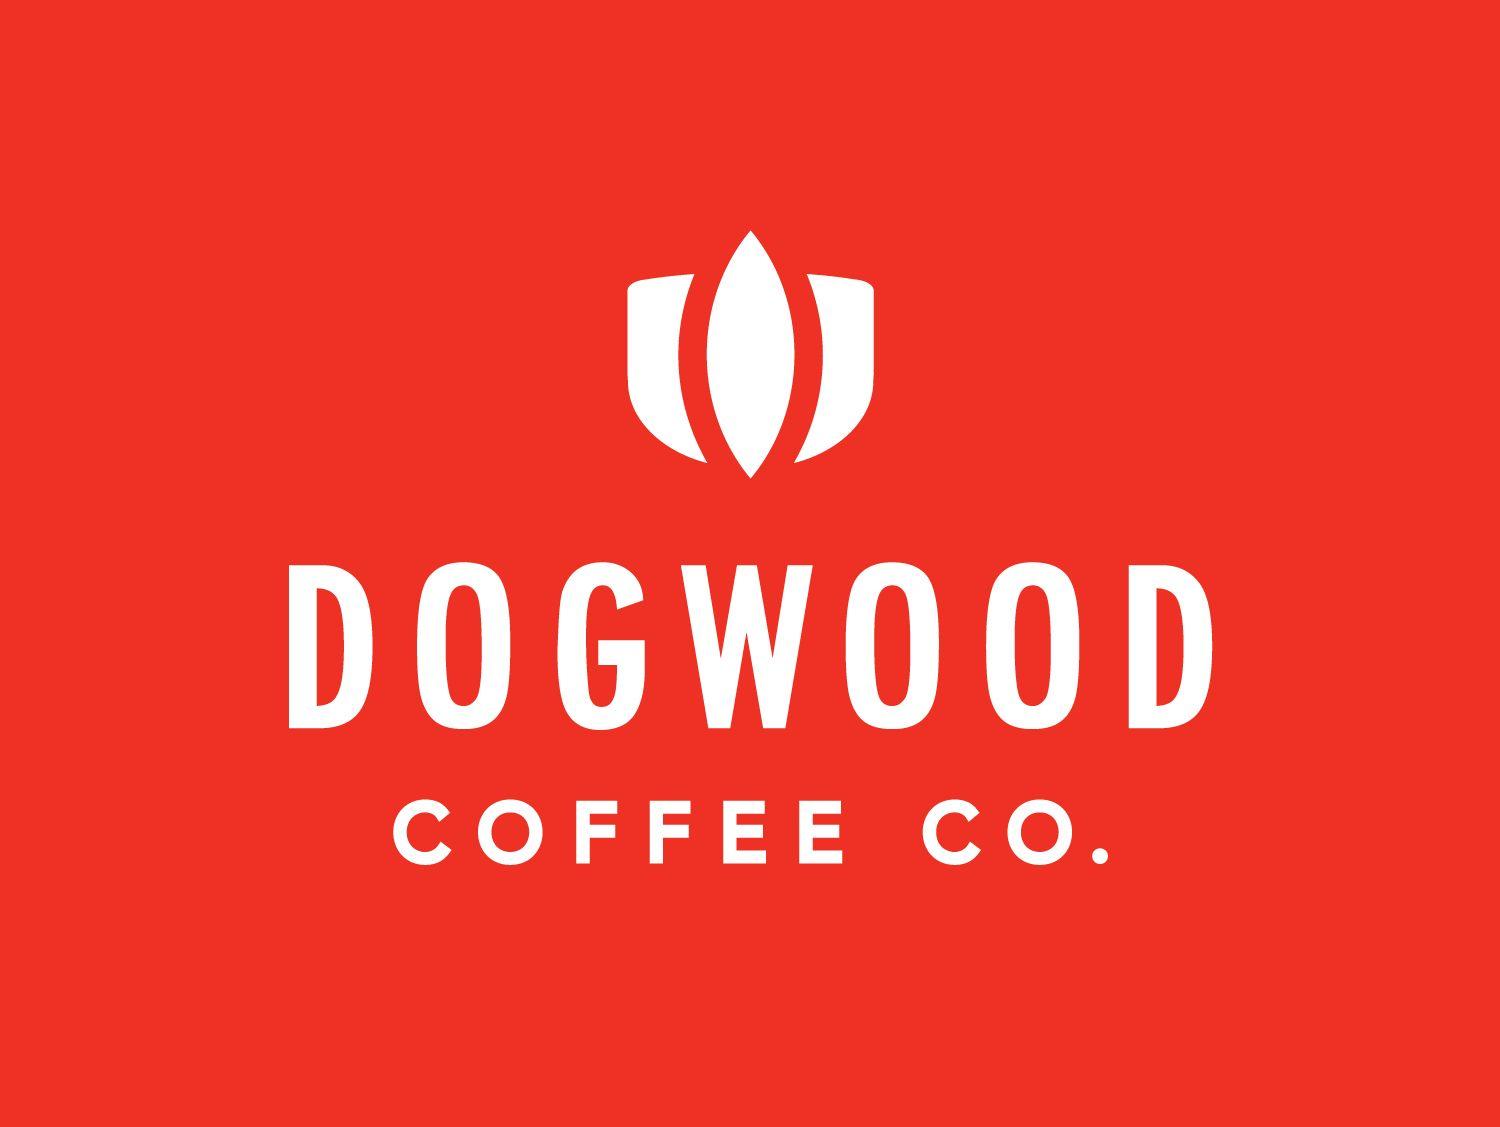 CoffeeCo Logo - DOGWOOD COFFEE CO